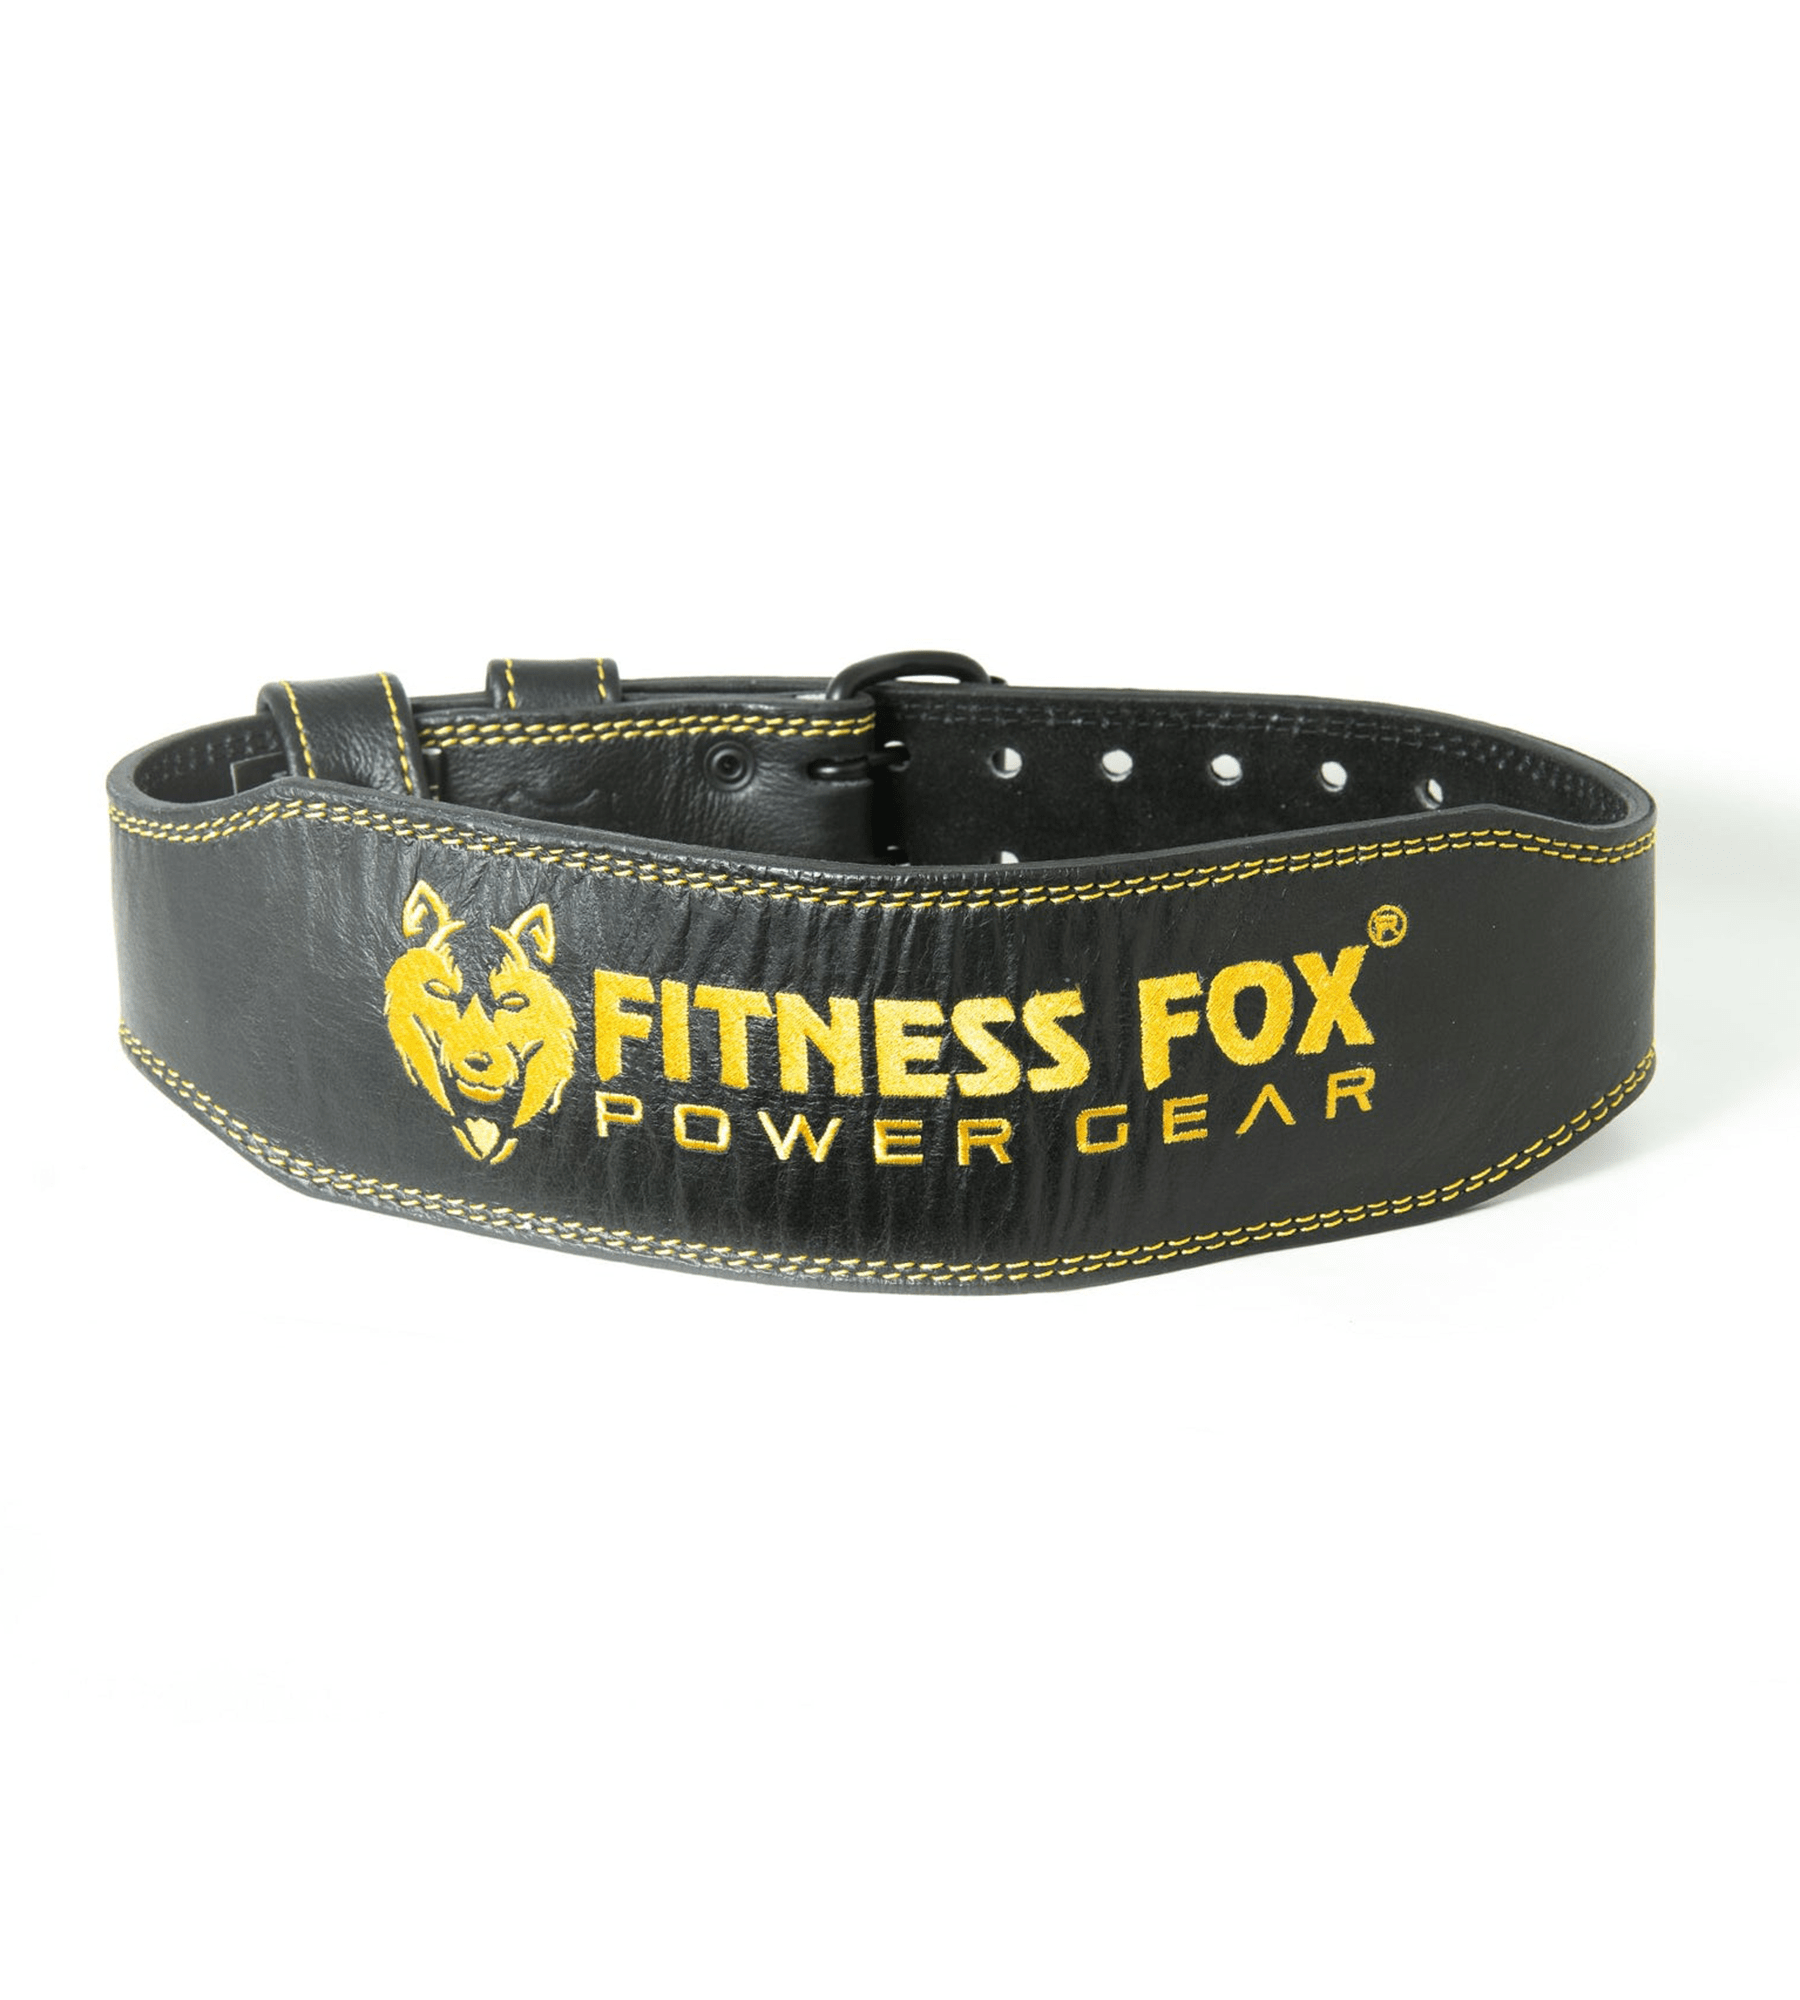 FITNESS FOX 4" Padded Classic Black Lifting Grain LEATHER Belt